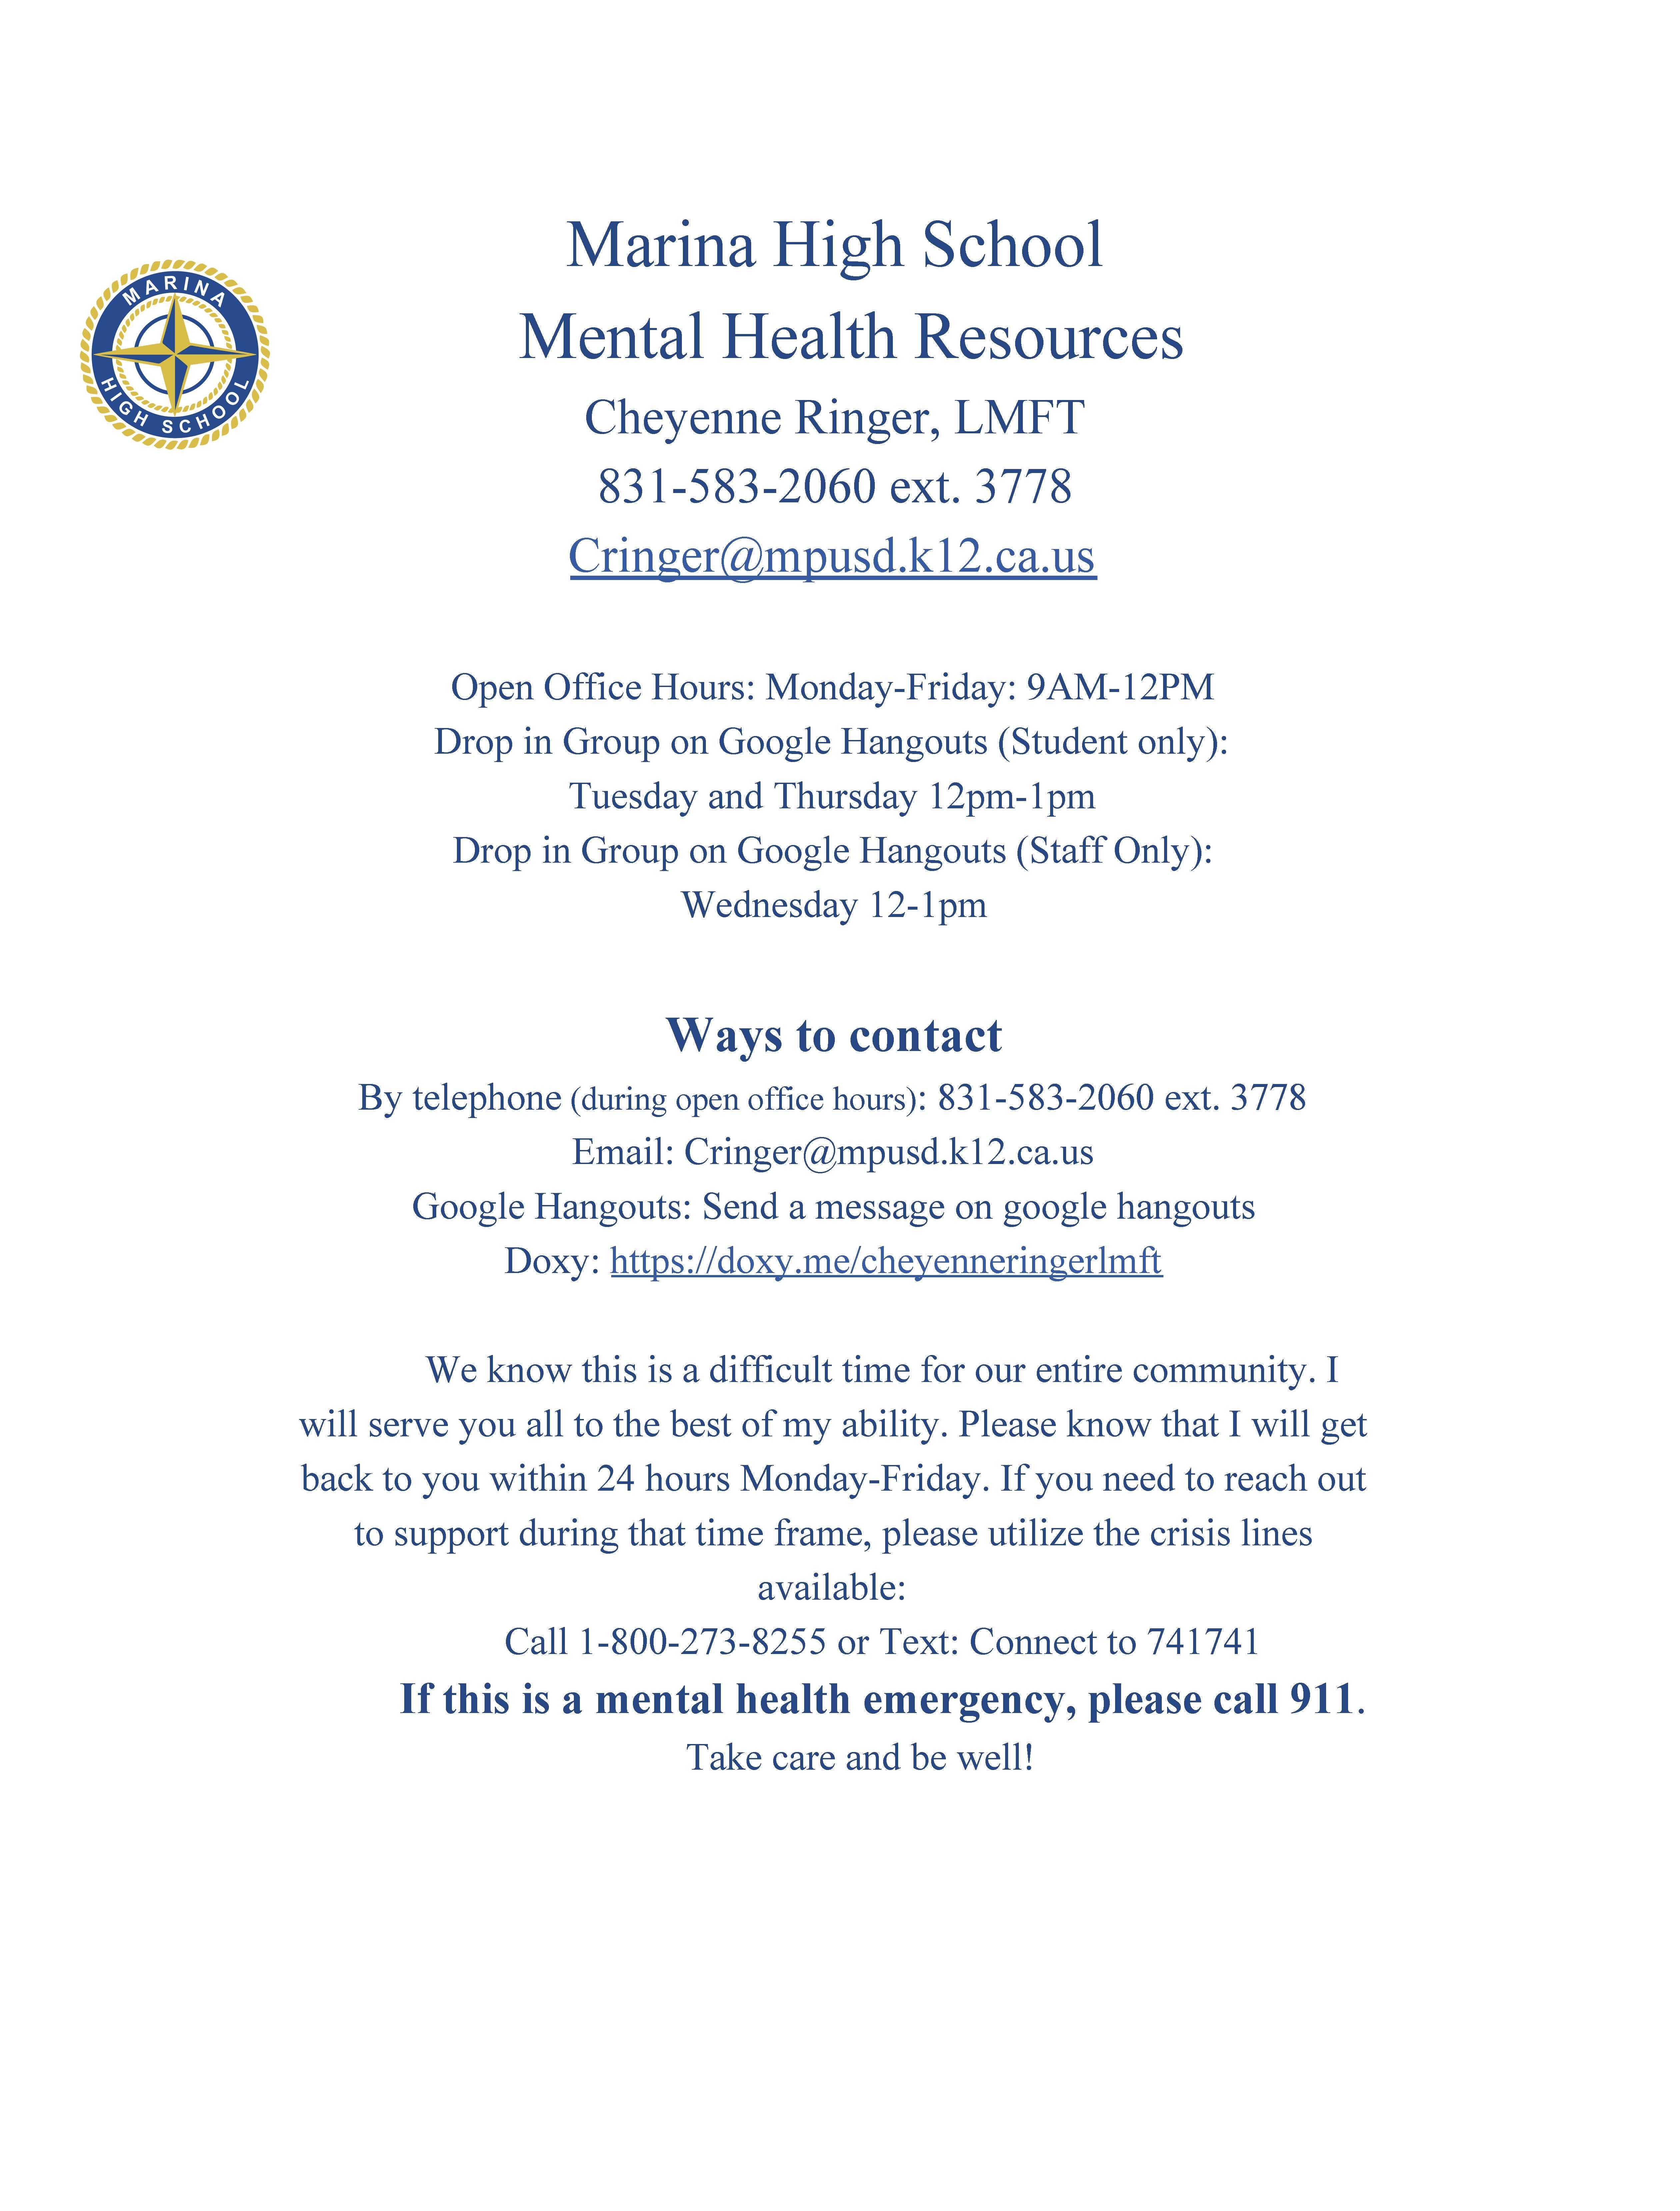 MaHS Mental Health Resources